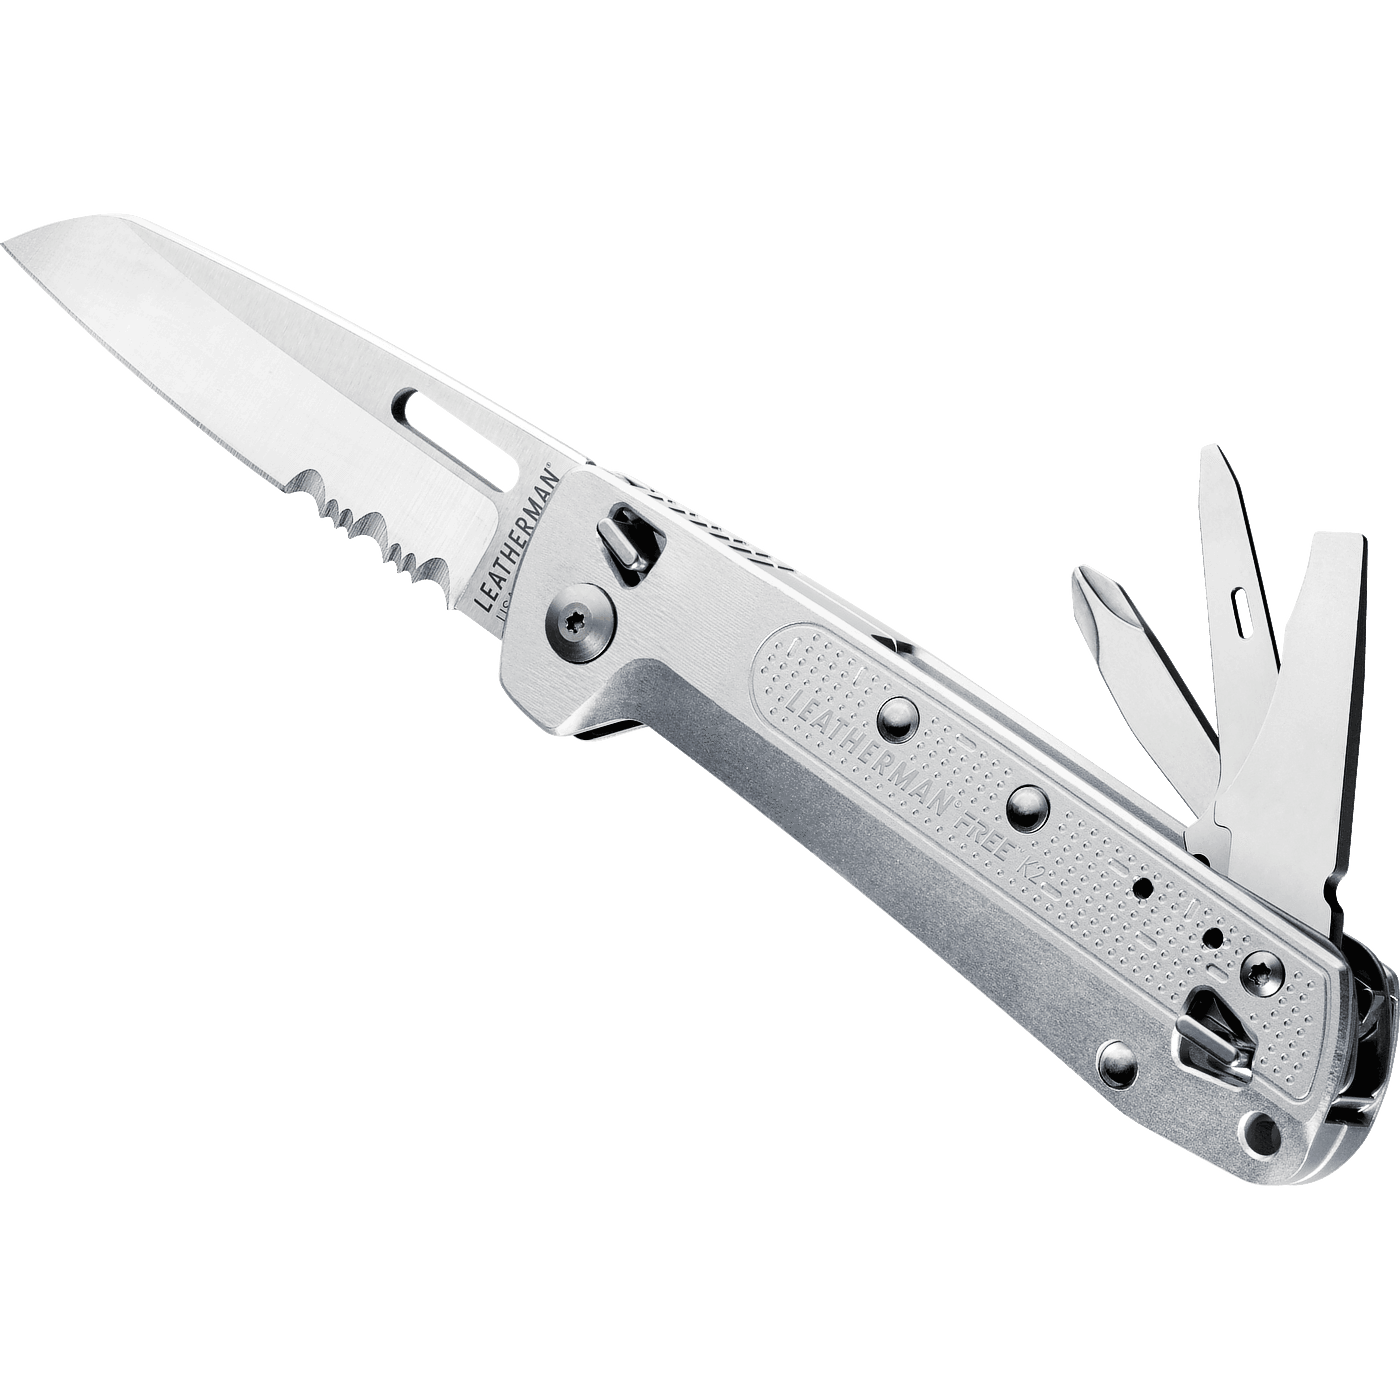 Leatherman Free K2X Multipurpose Knife